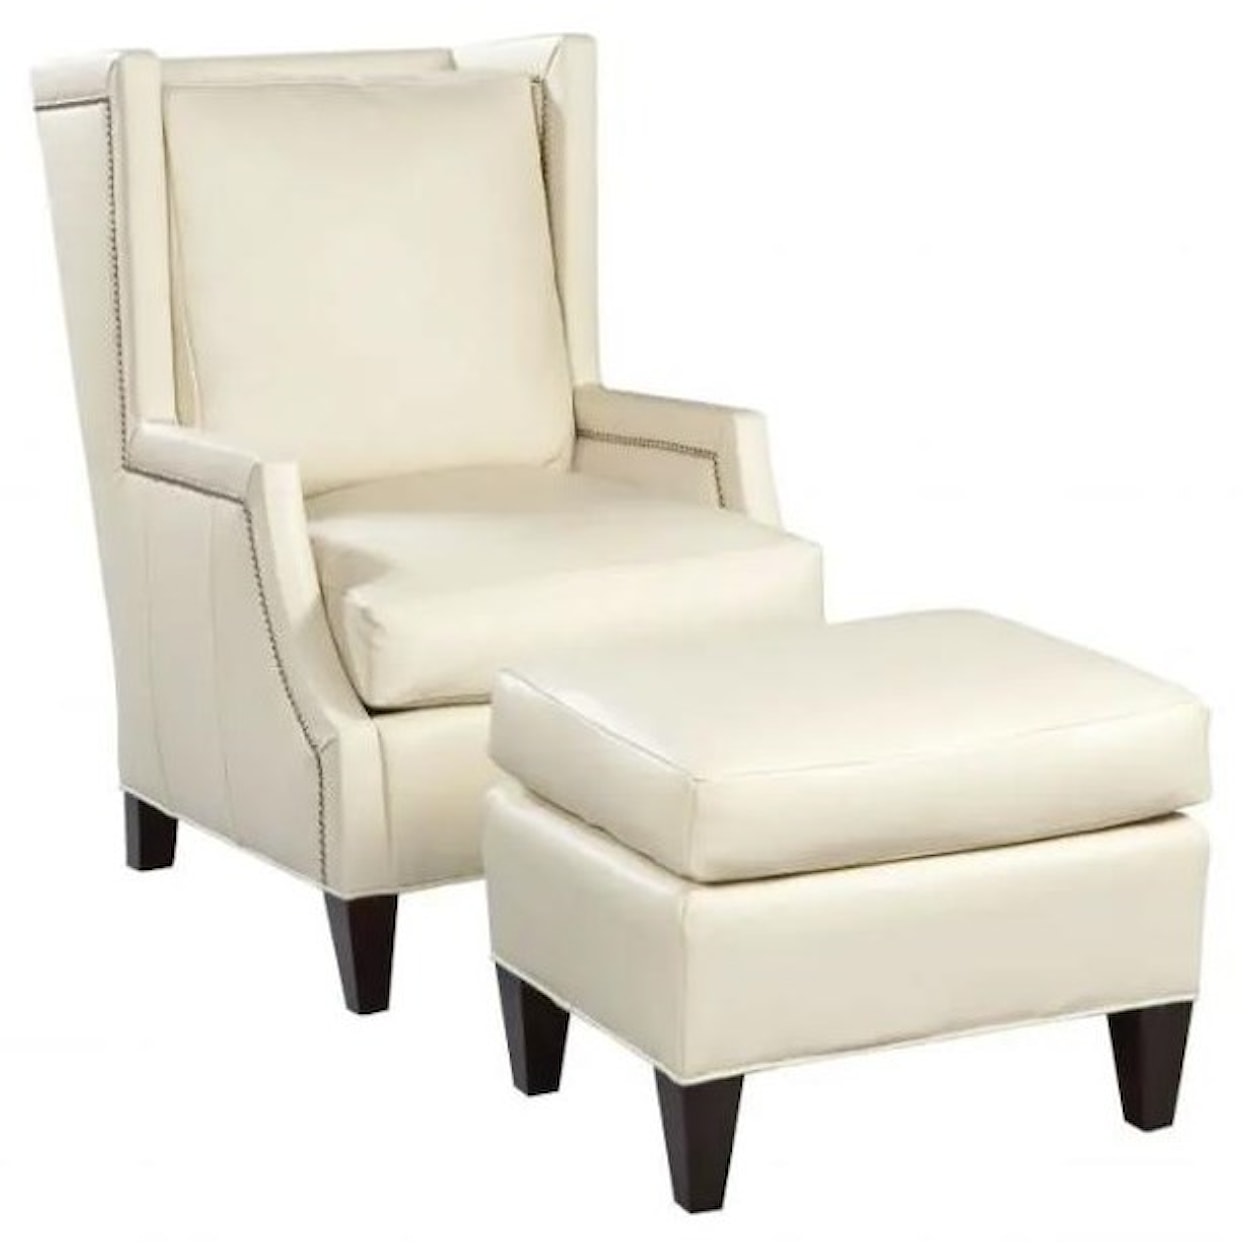 Fairfield Stuart Stuart Lounge Chair